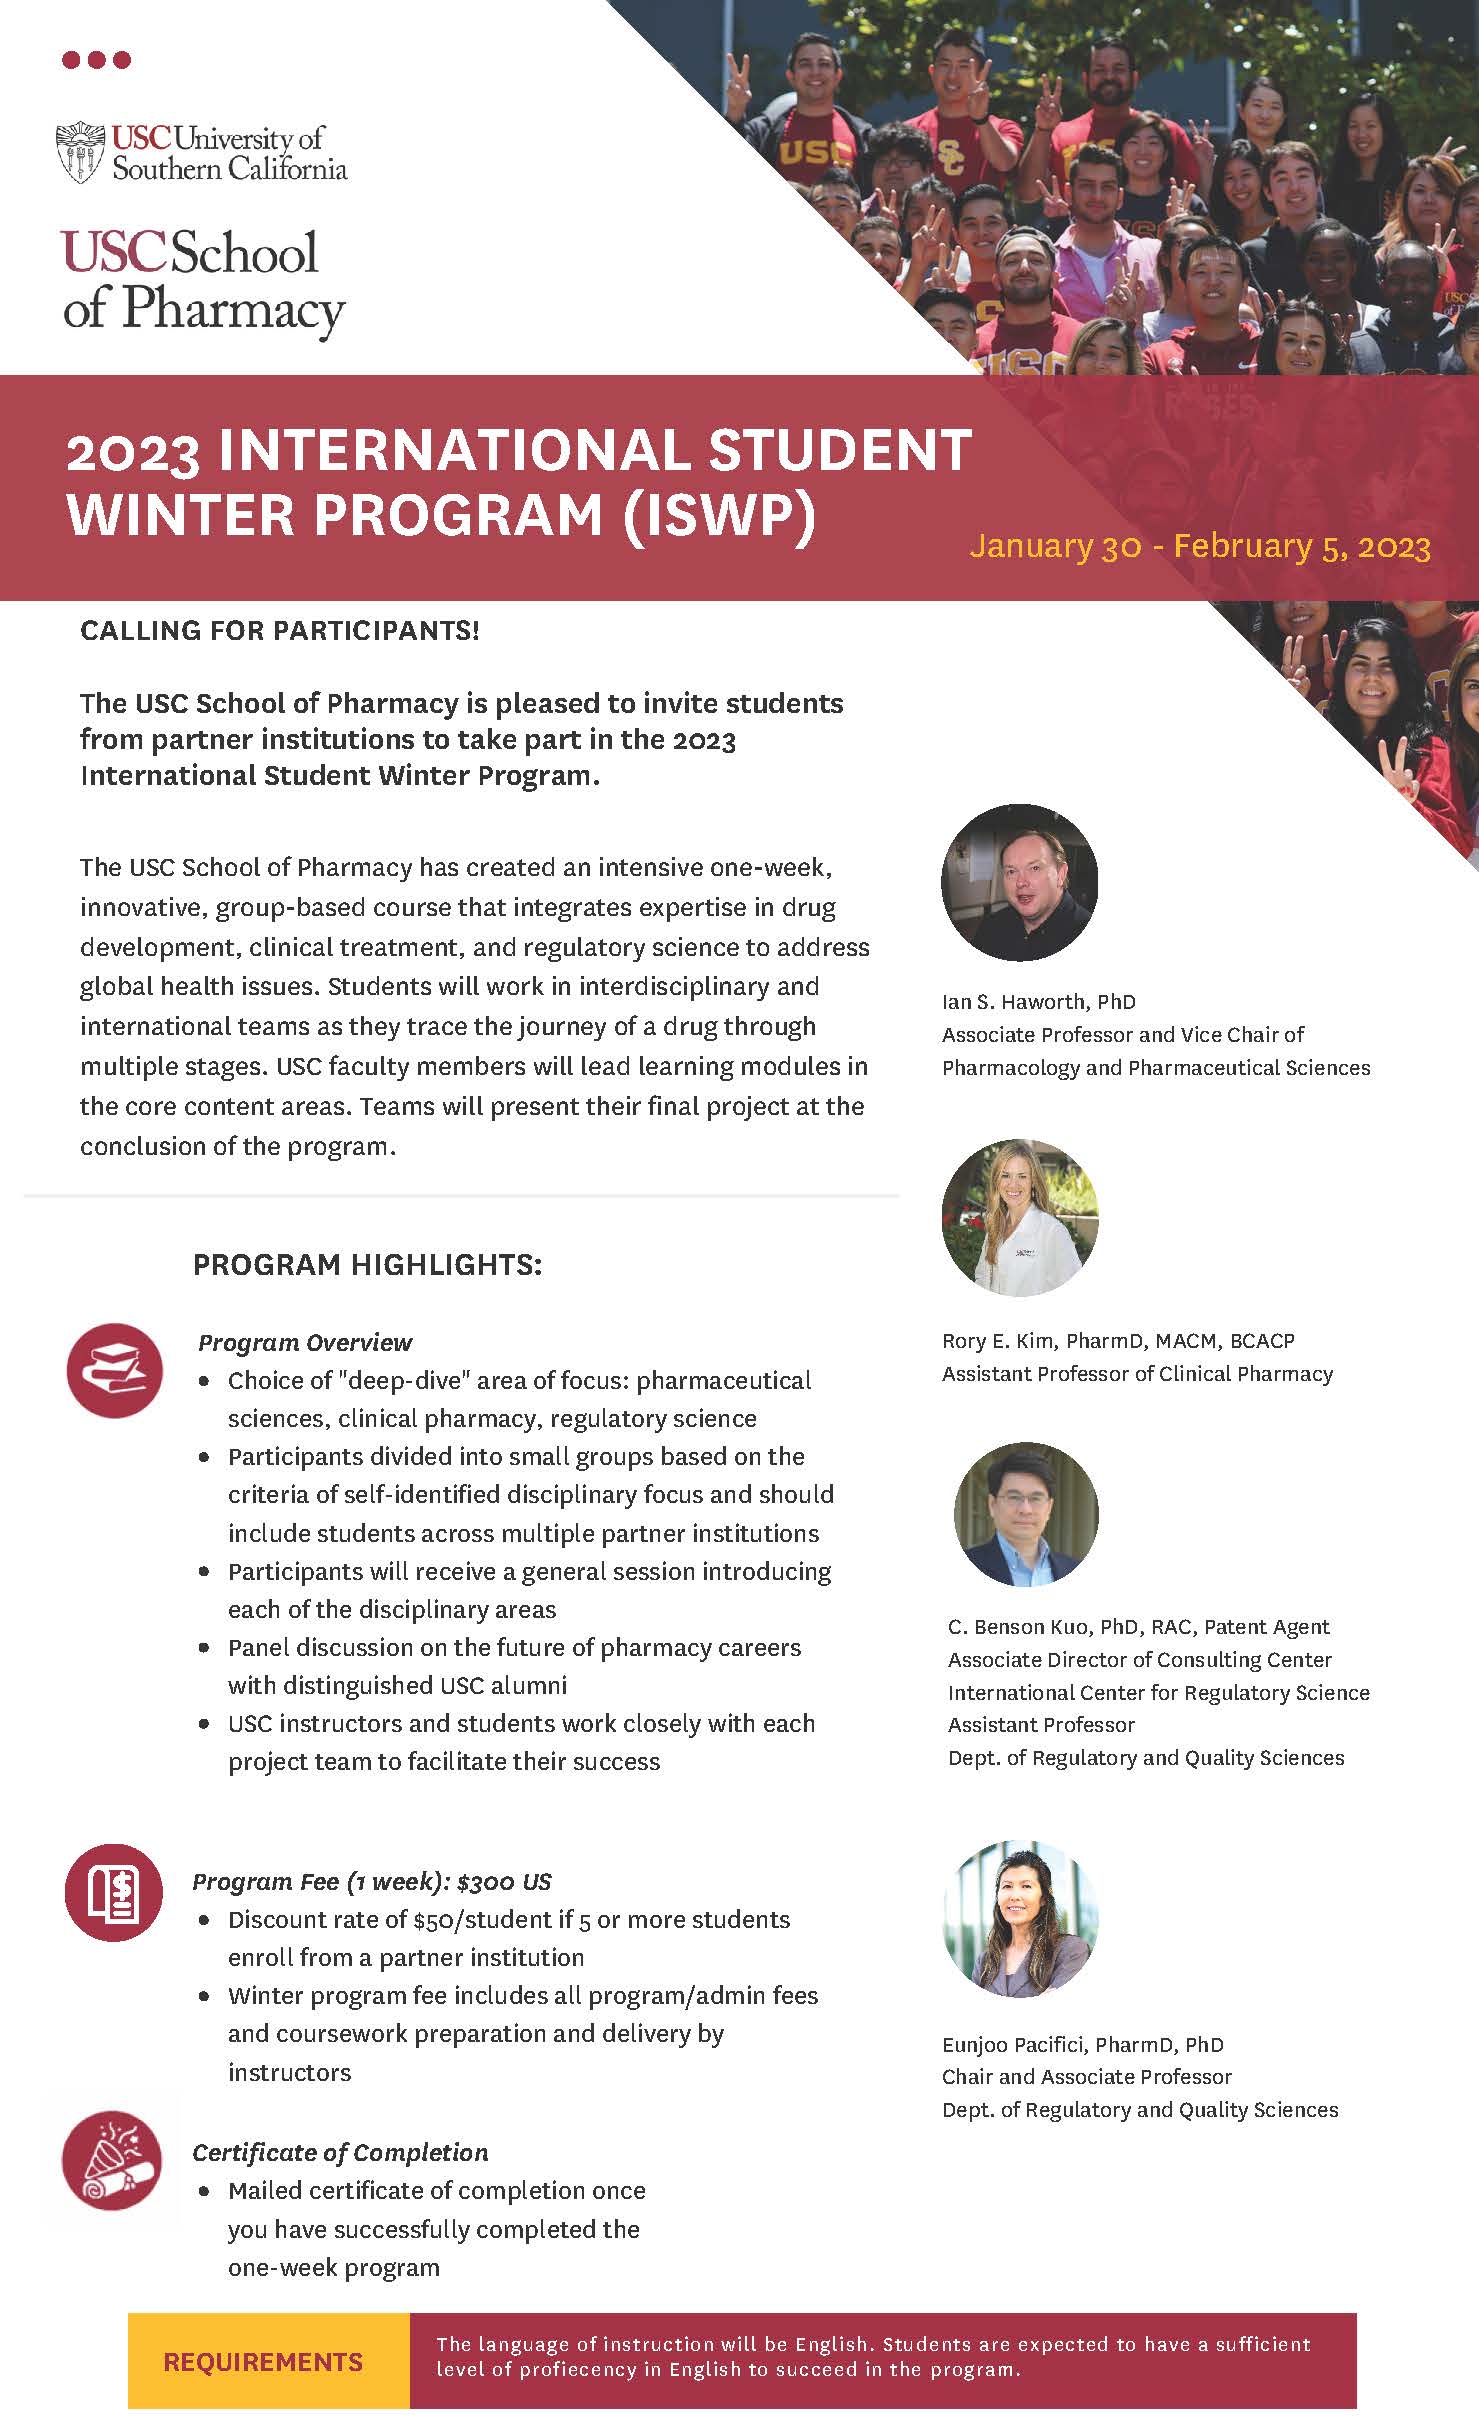 International Student Winter Program 2023 Flyer